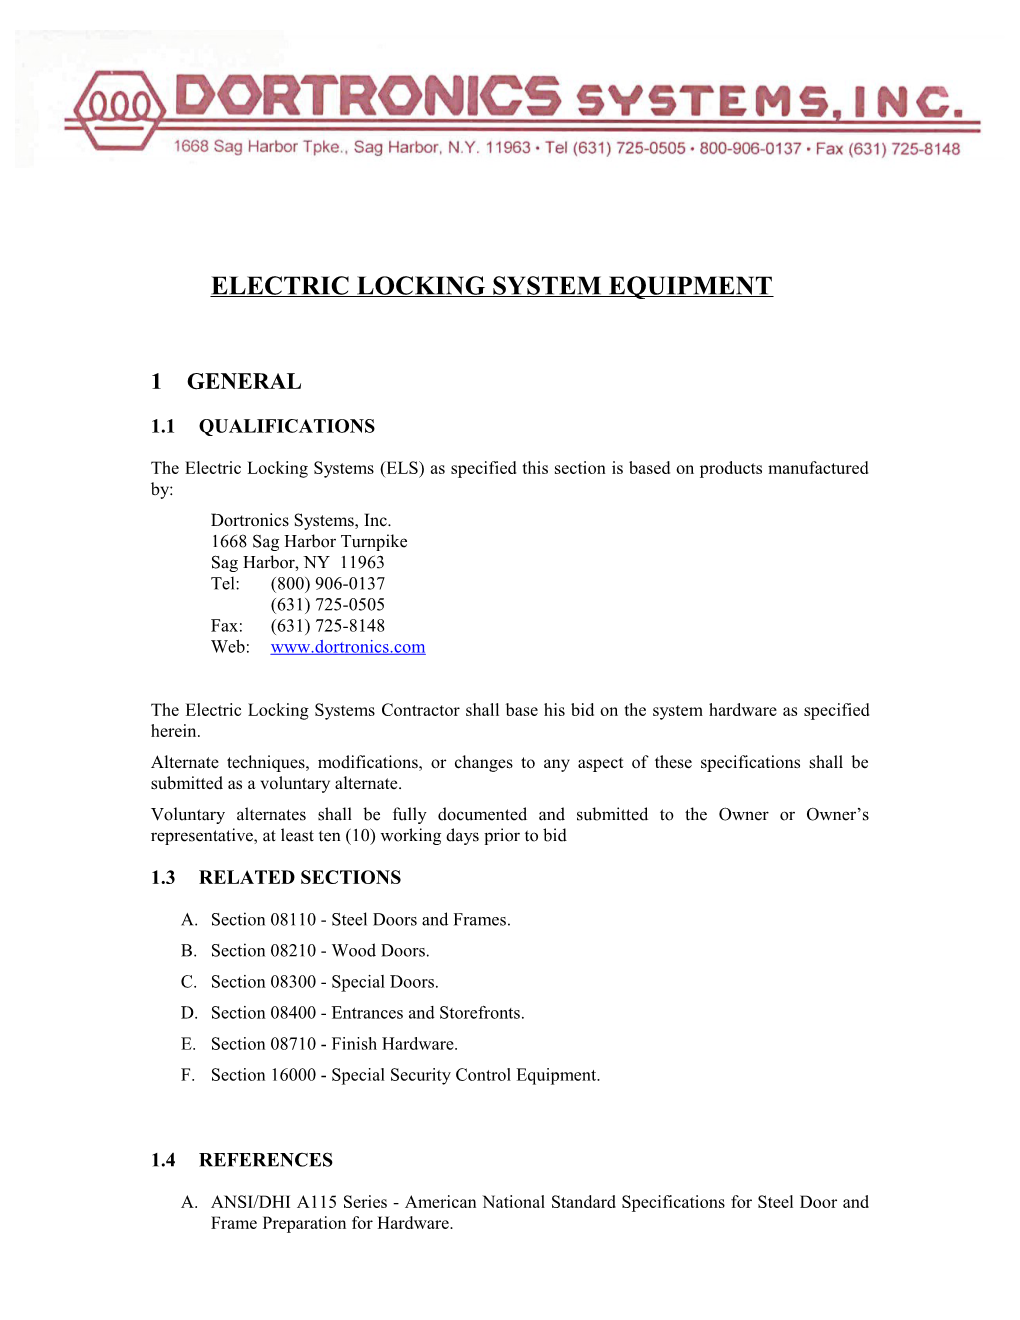 Electric Locking System Equipment